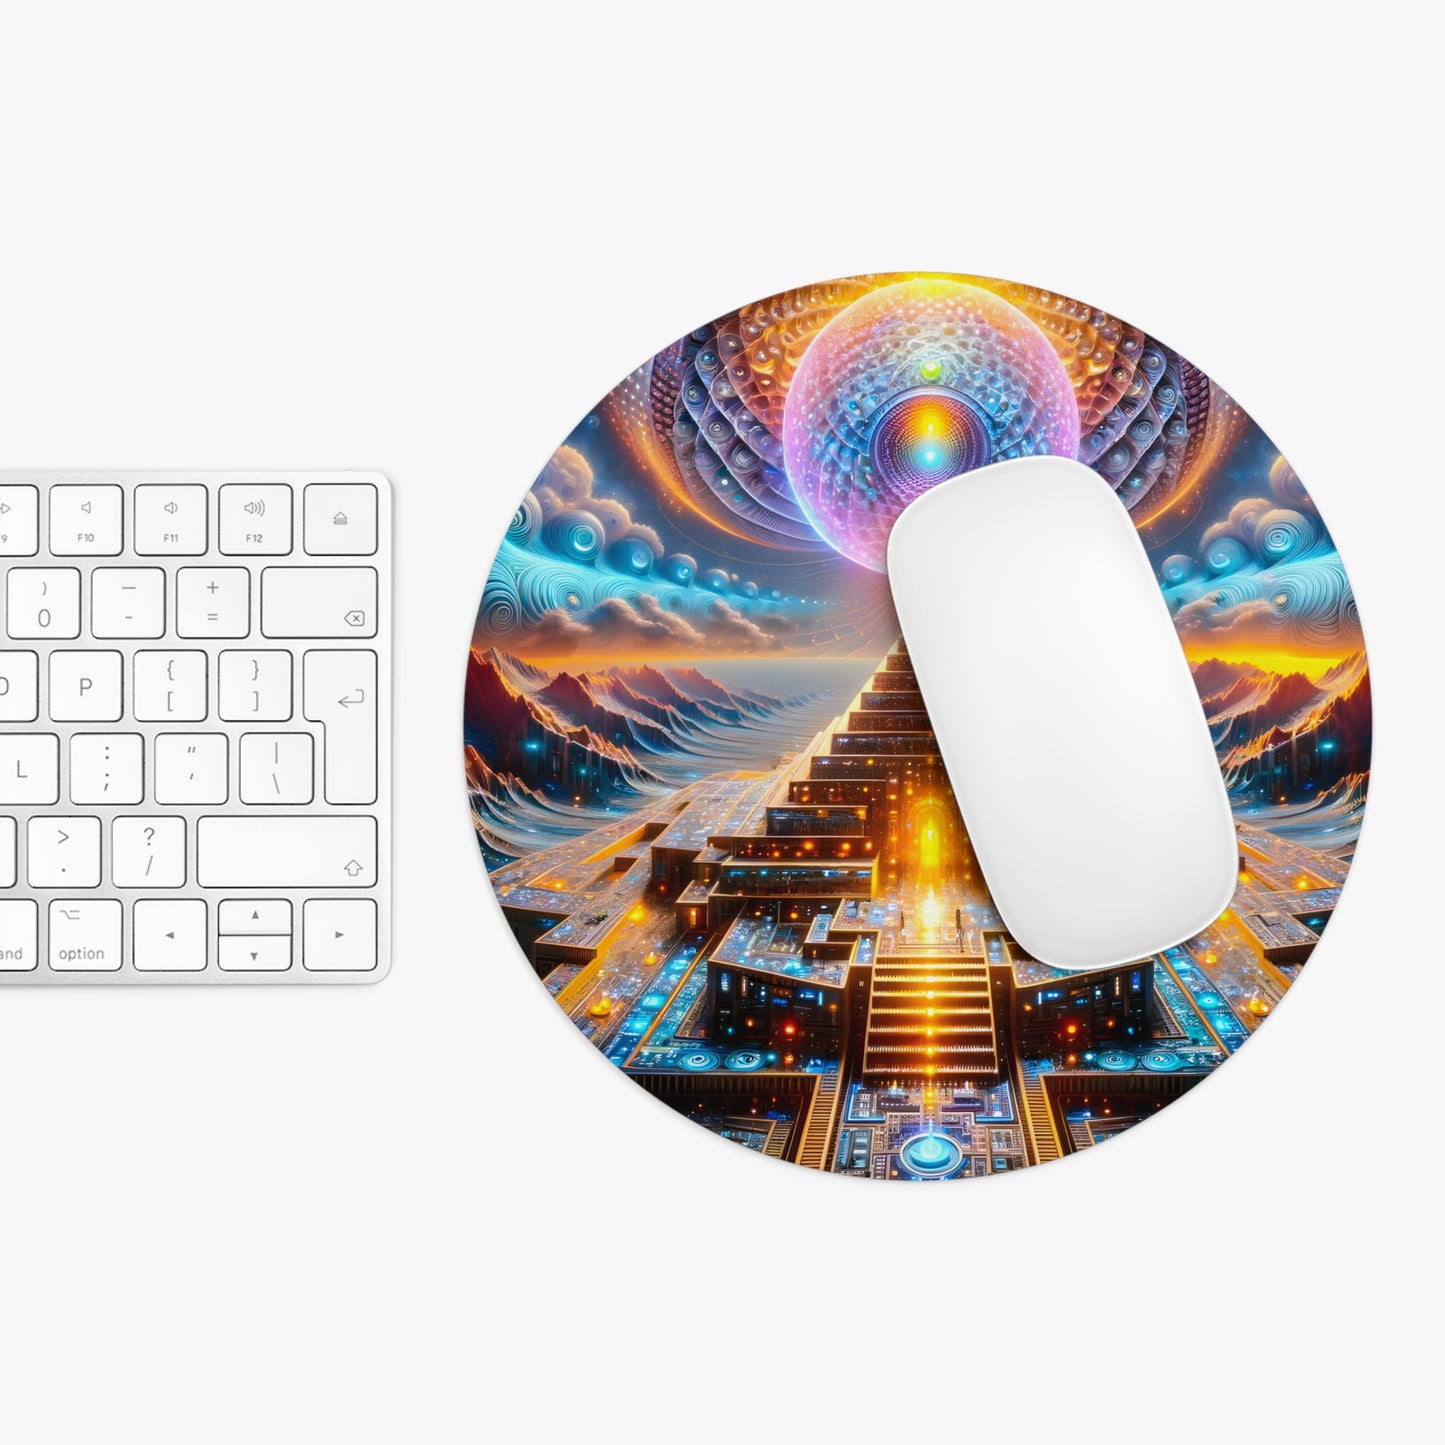 Recursive Technology Mouse Pad by Meta Zen - Computer Techie Tech Geek Nerd IT Guy Gift